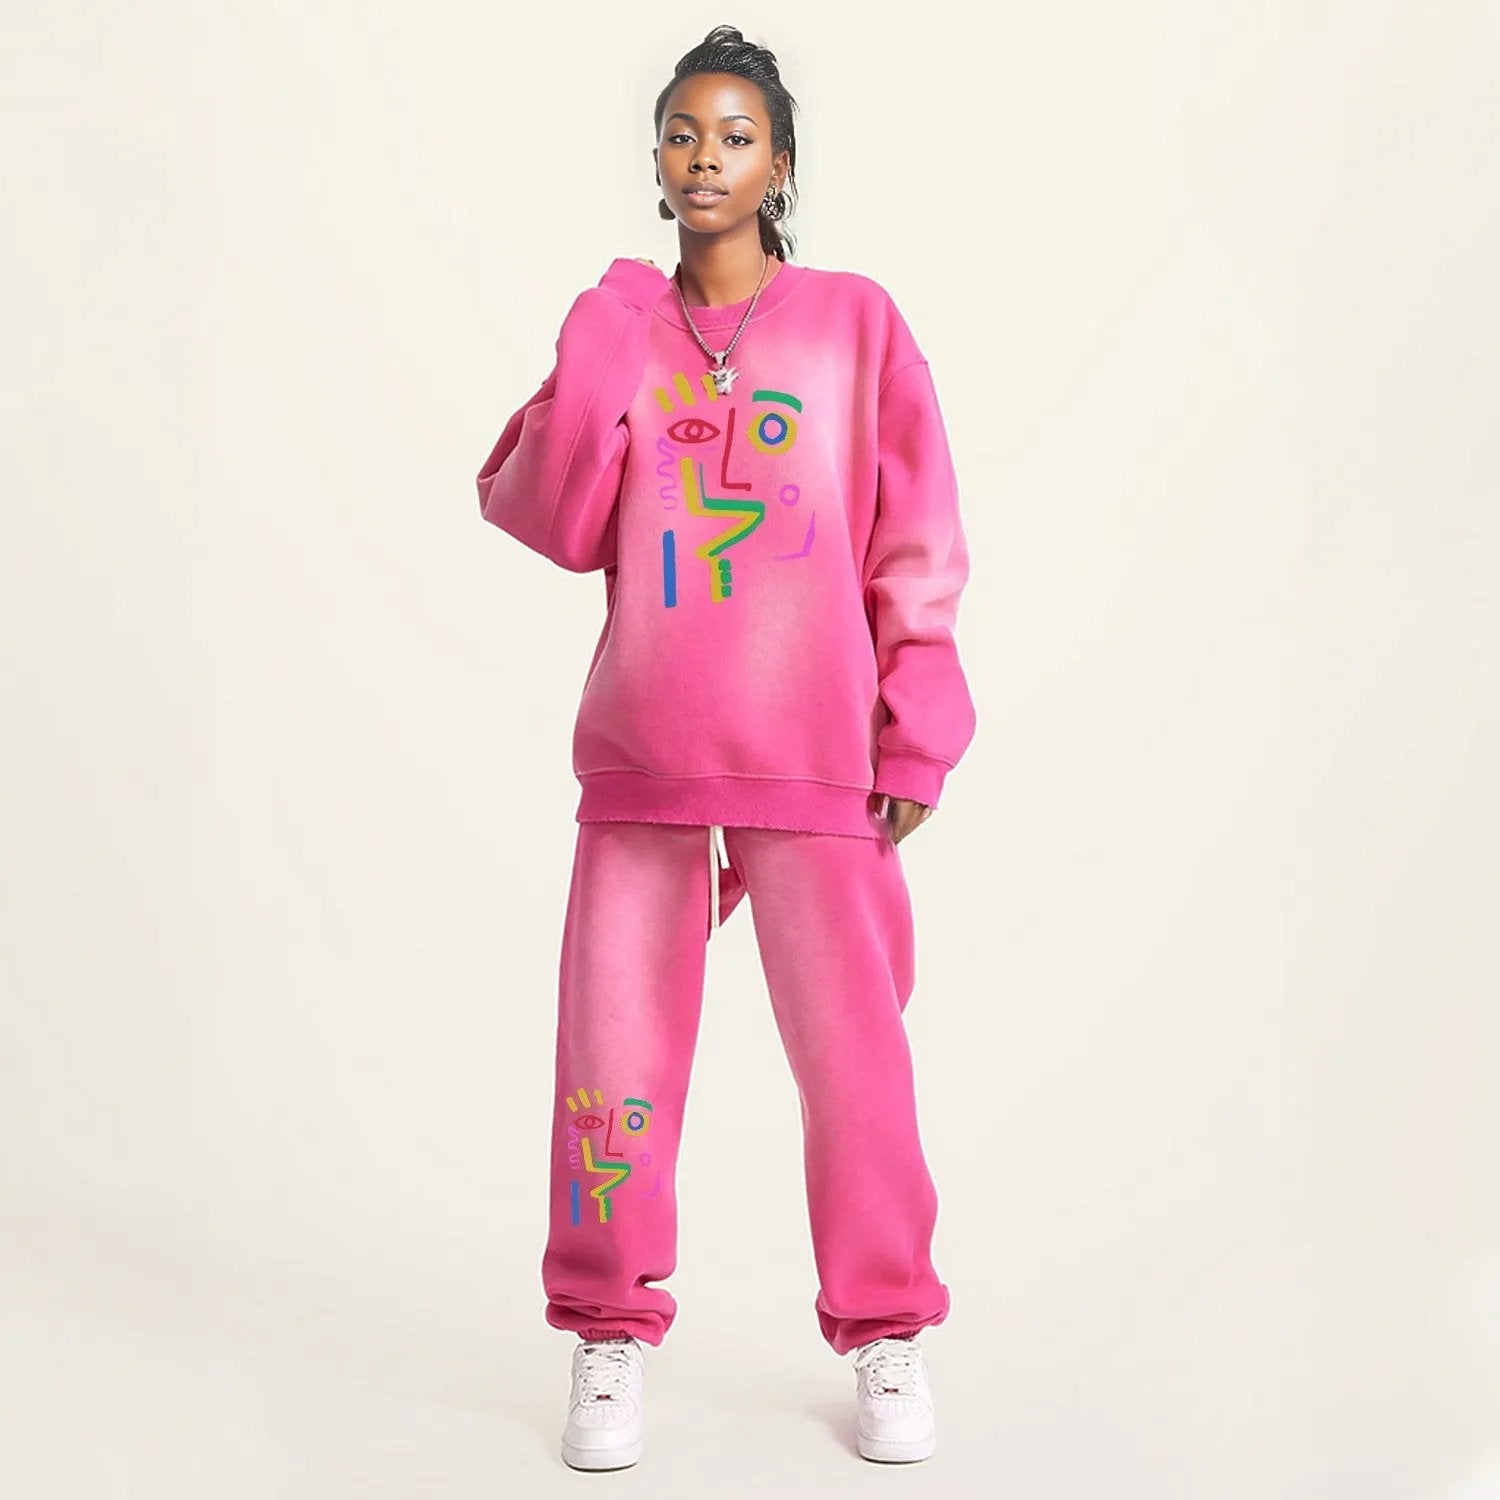 Face It (Camel&Rose)Streetwear Unisex Monkey Washed Dyed Fleece Pullover Sweatshirt - women's sweater at TFC&H Co.